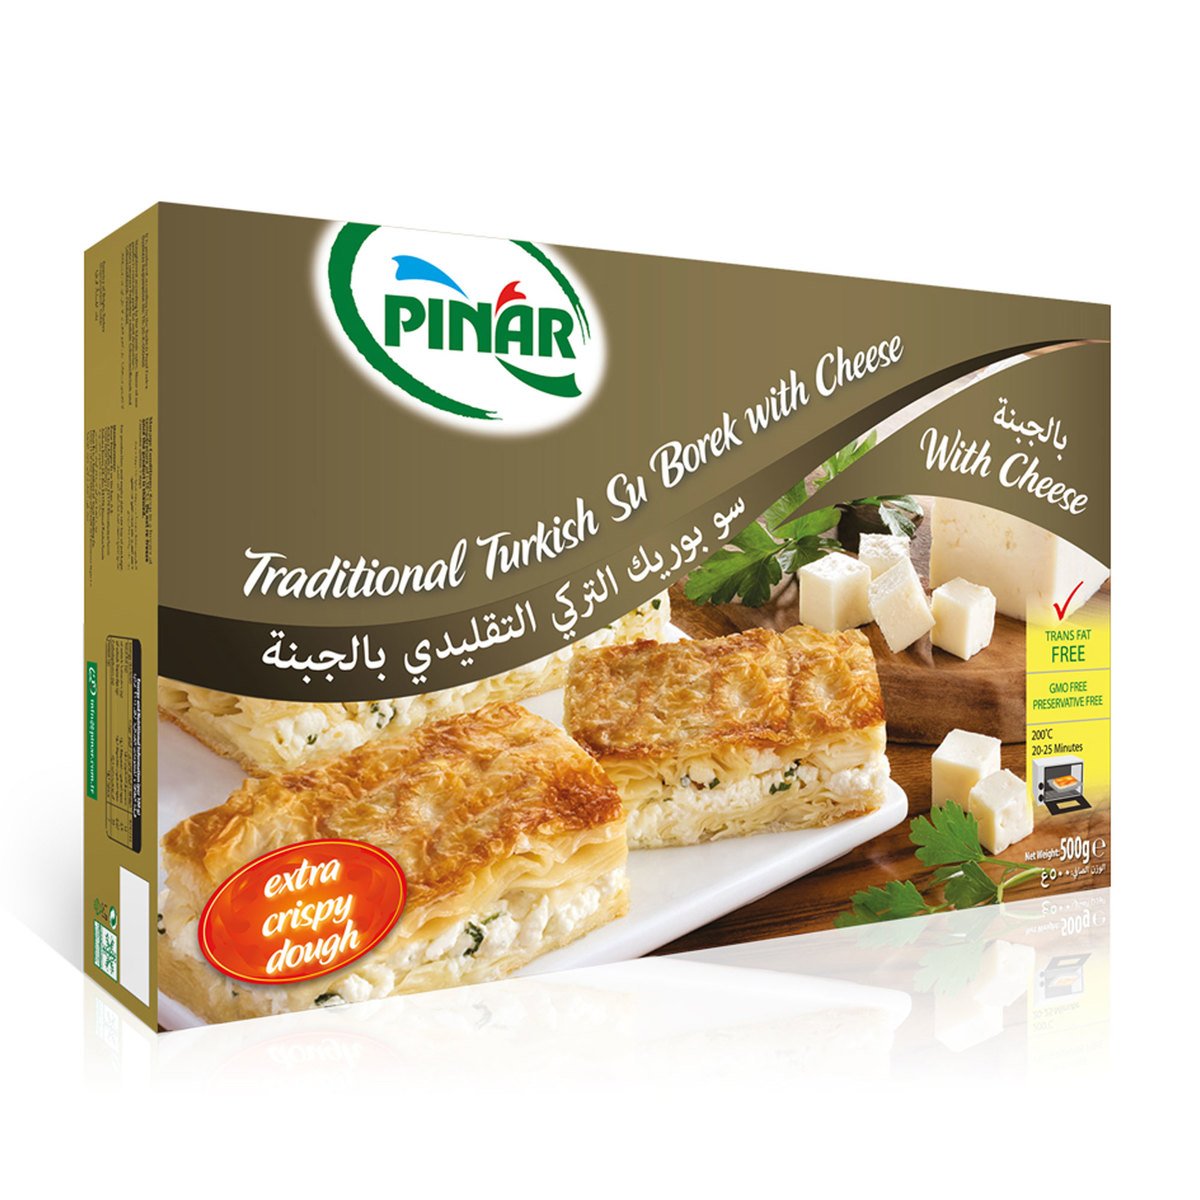 Pinar Turkish Su Borek with Cheese 500 g